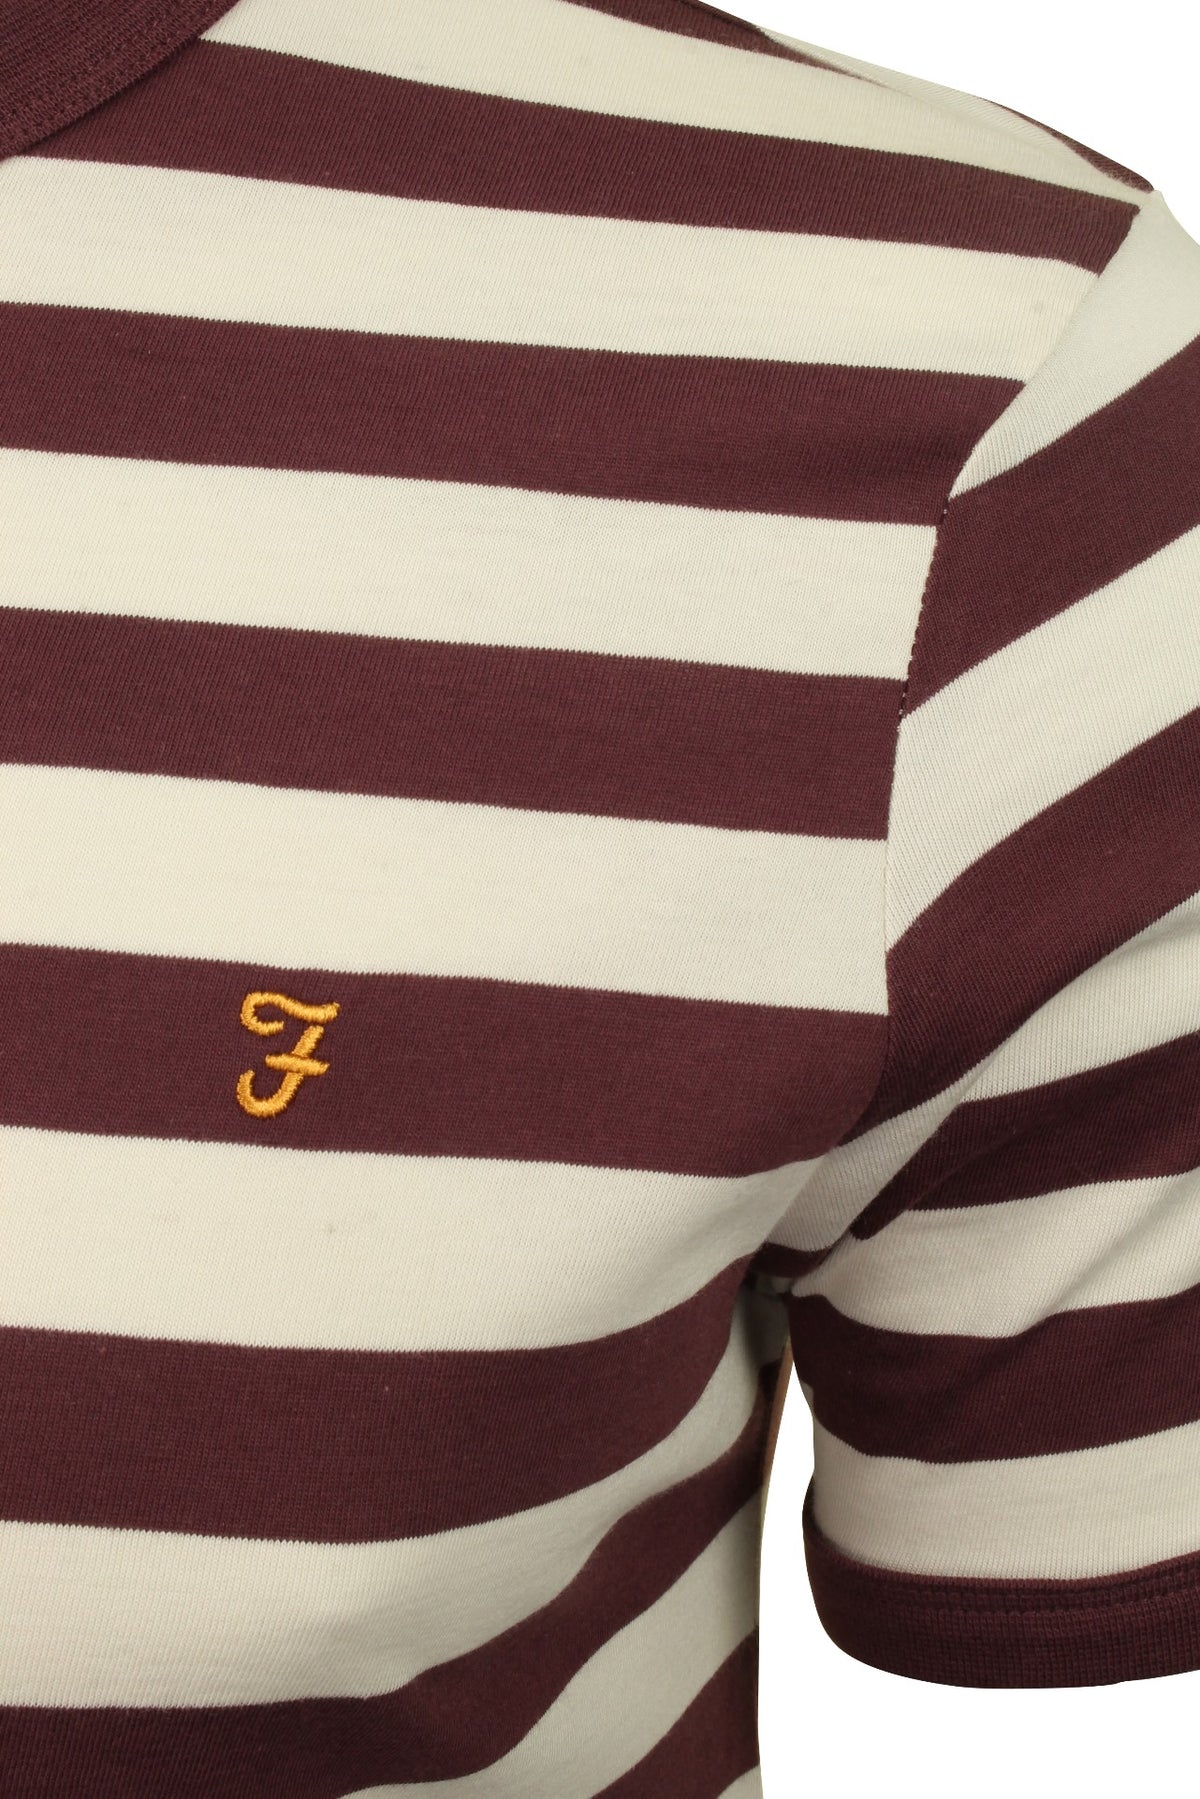 Farah Mens T-Shirt 'Belgrove Stripe', 02, F4Kf8066, Farah Red/Ecru